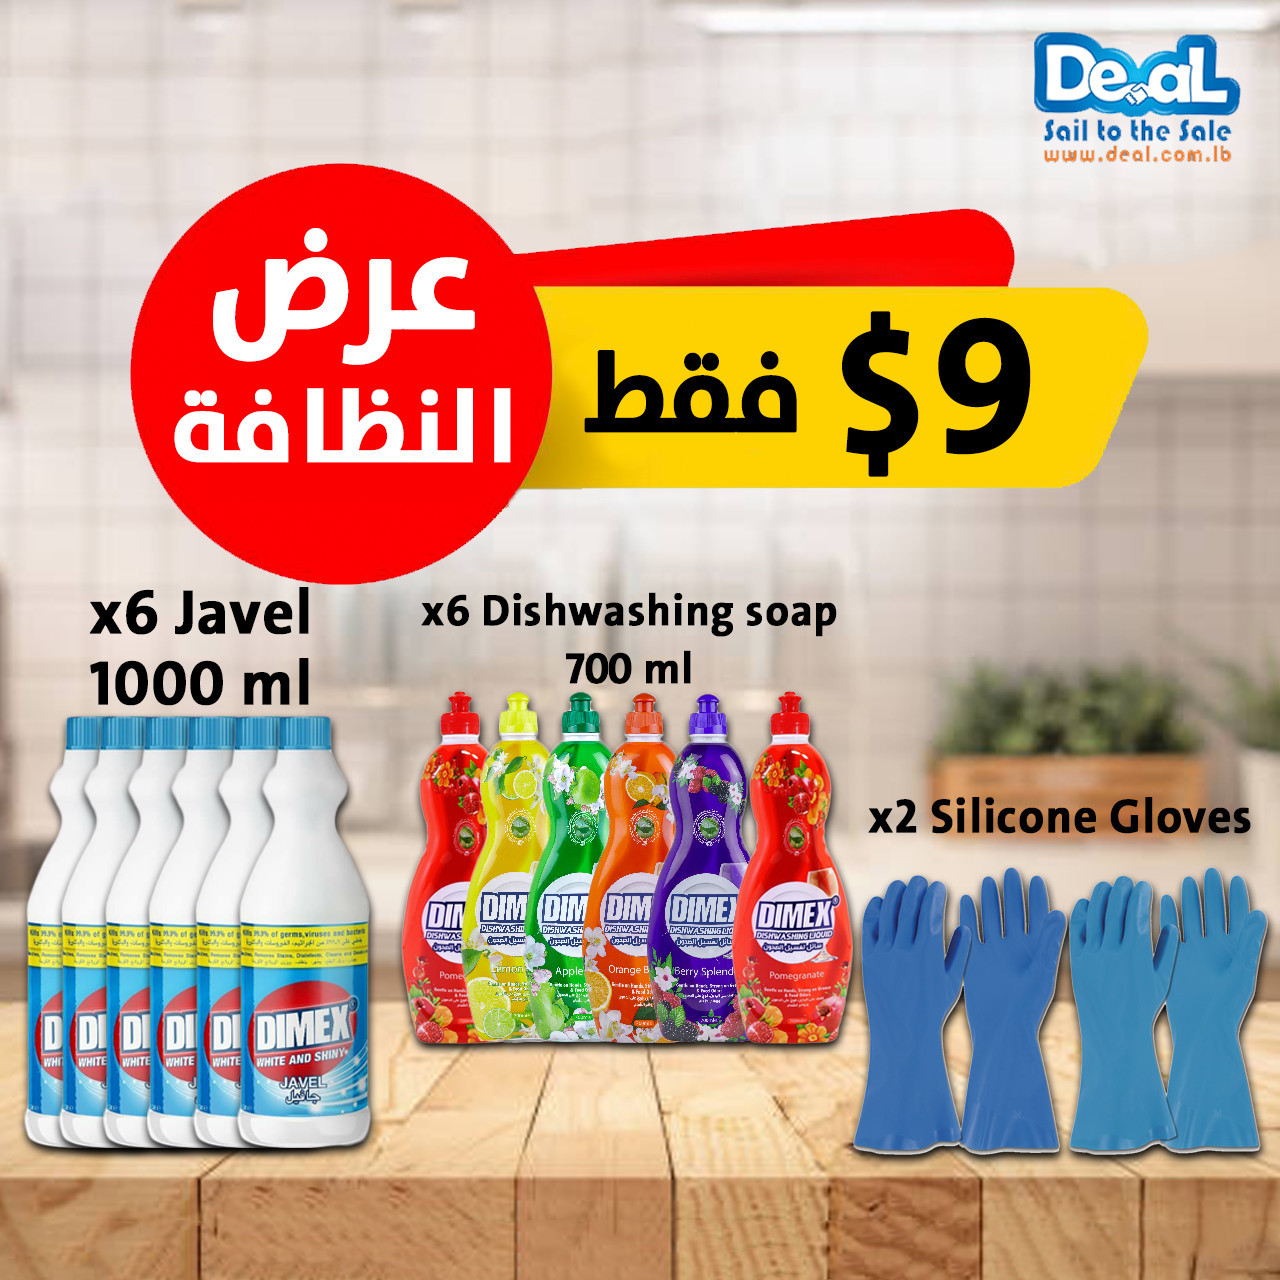 Cleaning Offer 6pcs dimex javel 1000ml+6pcs dimex dishwashing 700ml+2pair silicone gloves